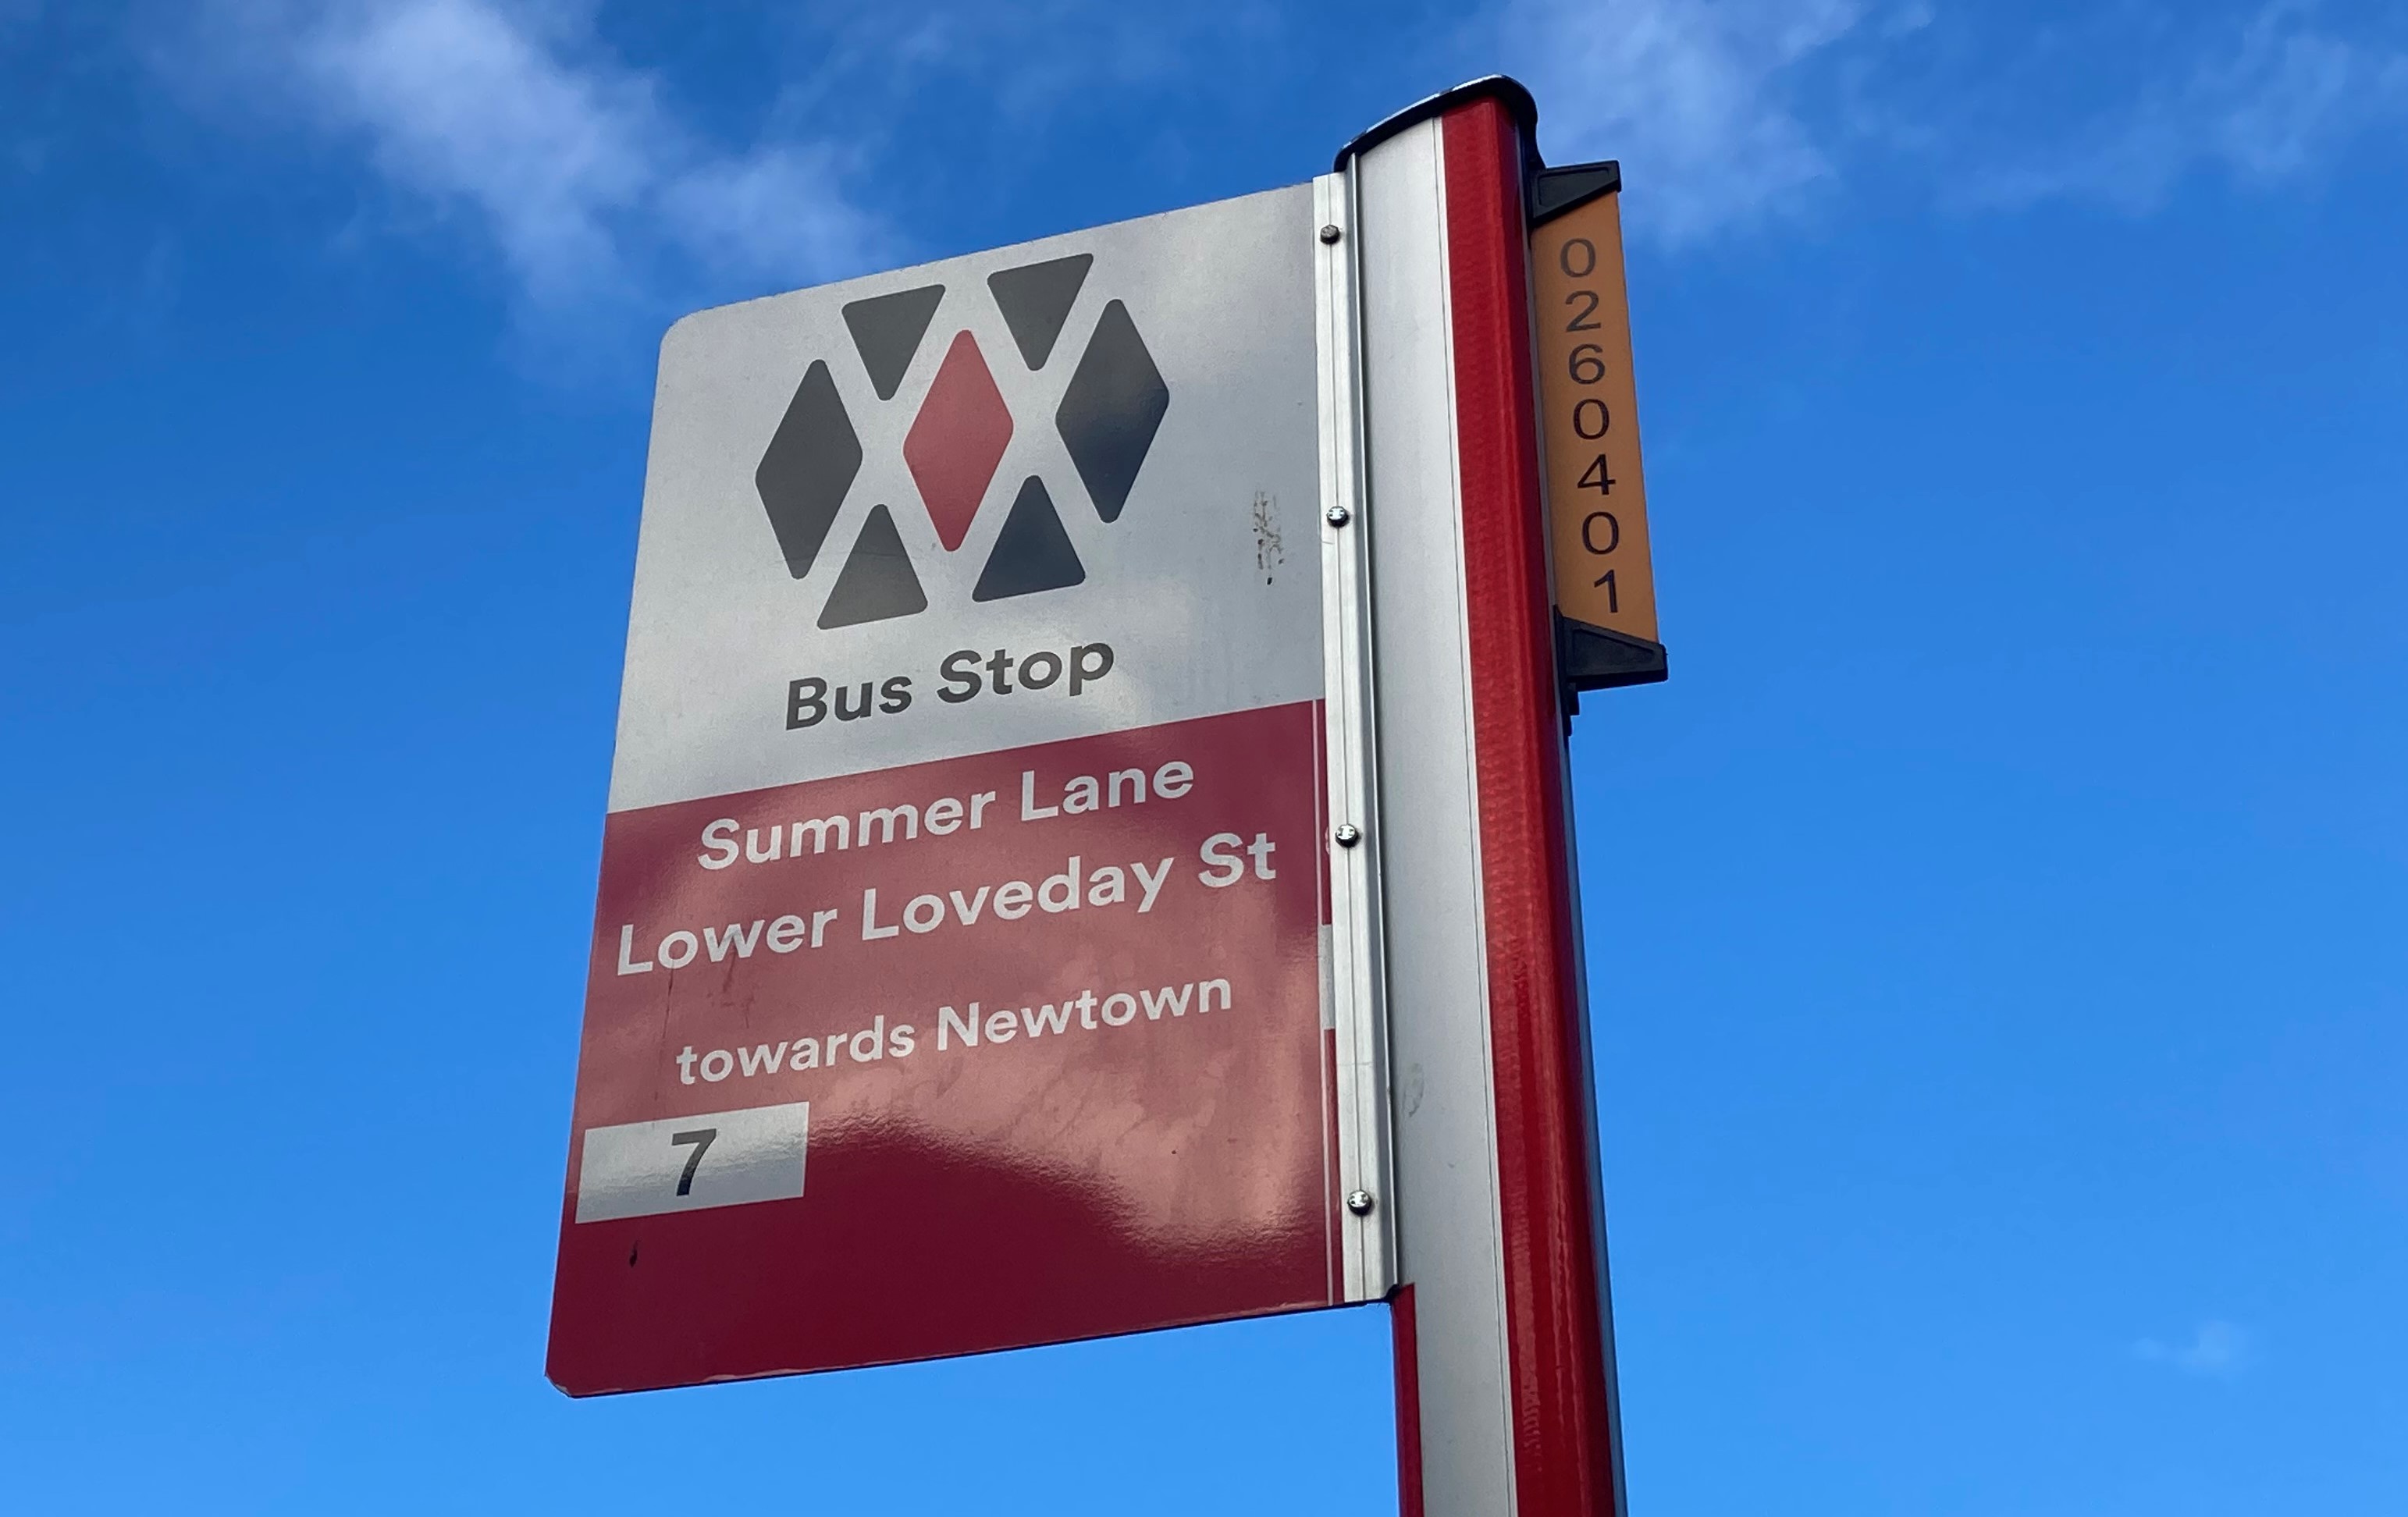 A bus stop sign